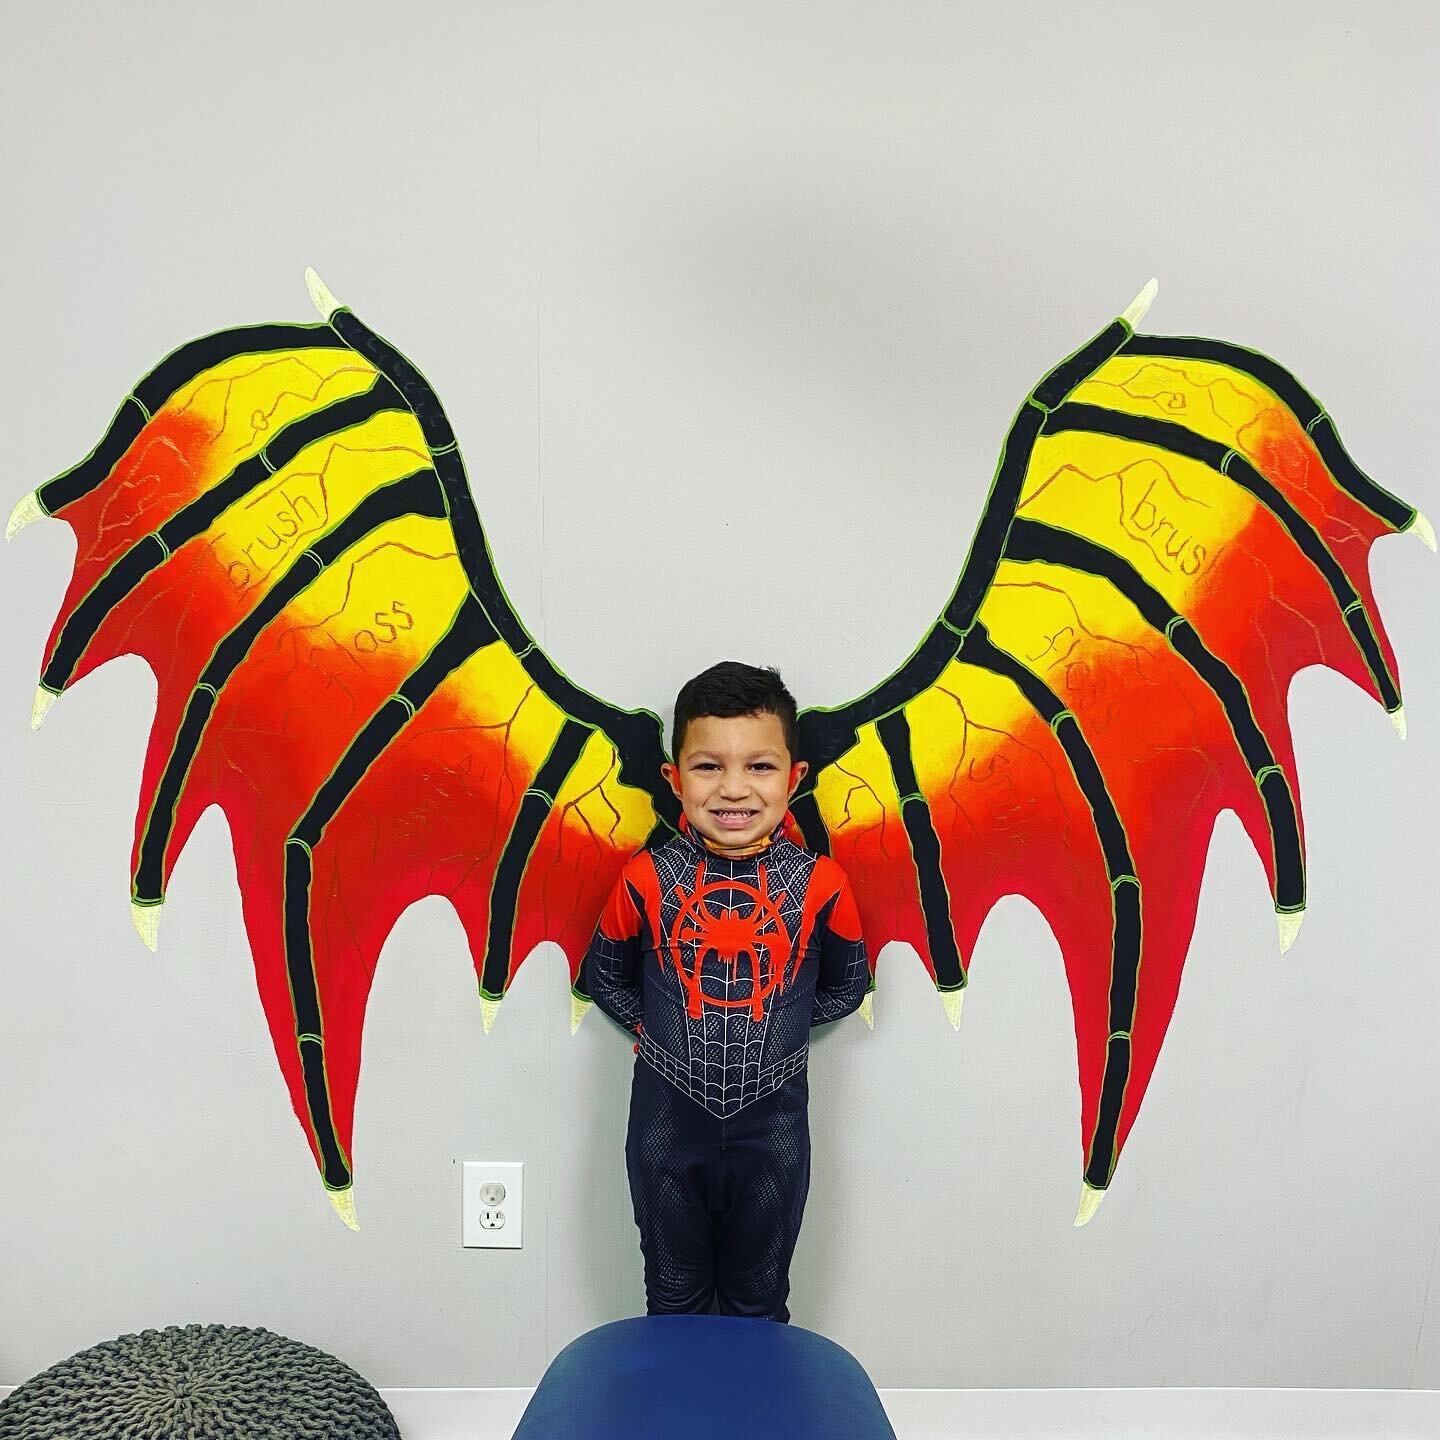 Our little superhero!💪 #cavityslayer #dragon #spiderman #nutleypediatricdentistry✨ #npd #hollywoodsmiles